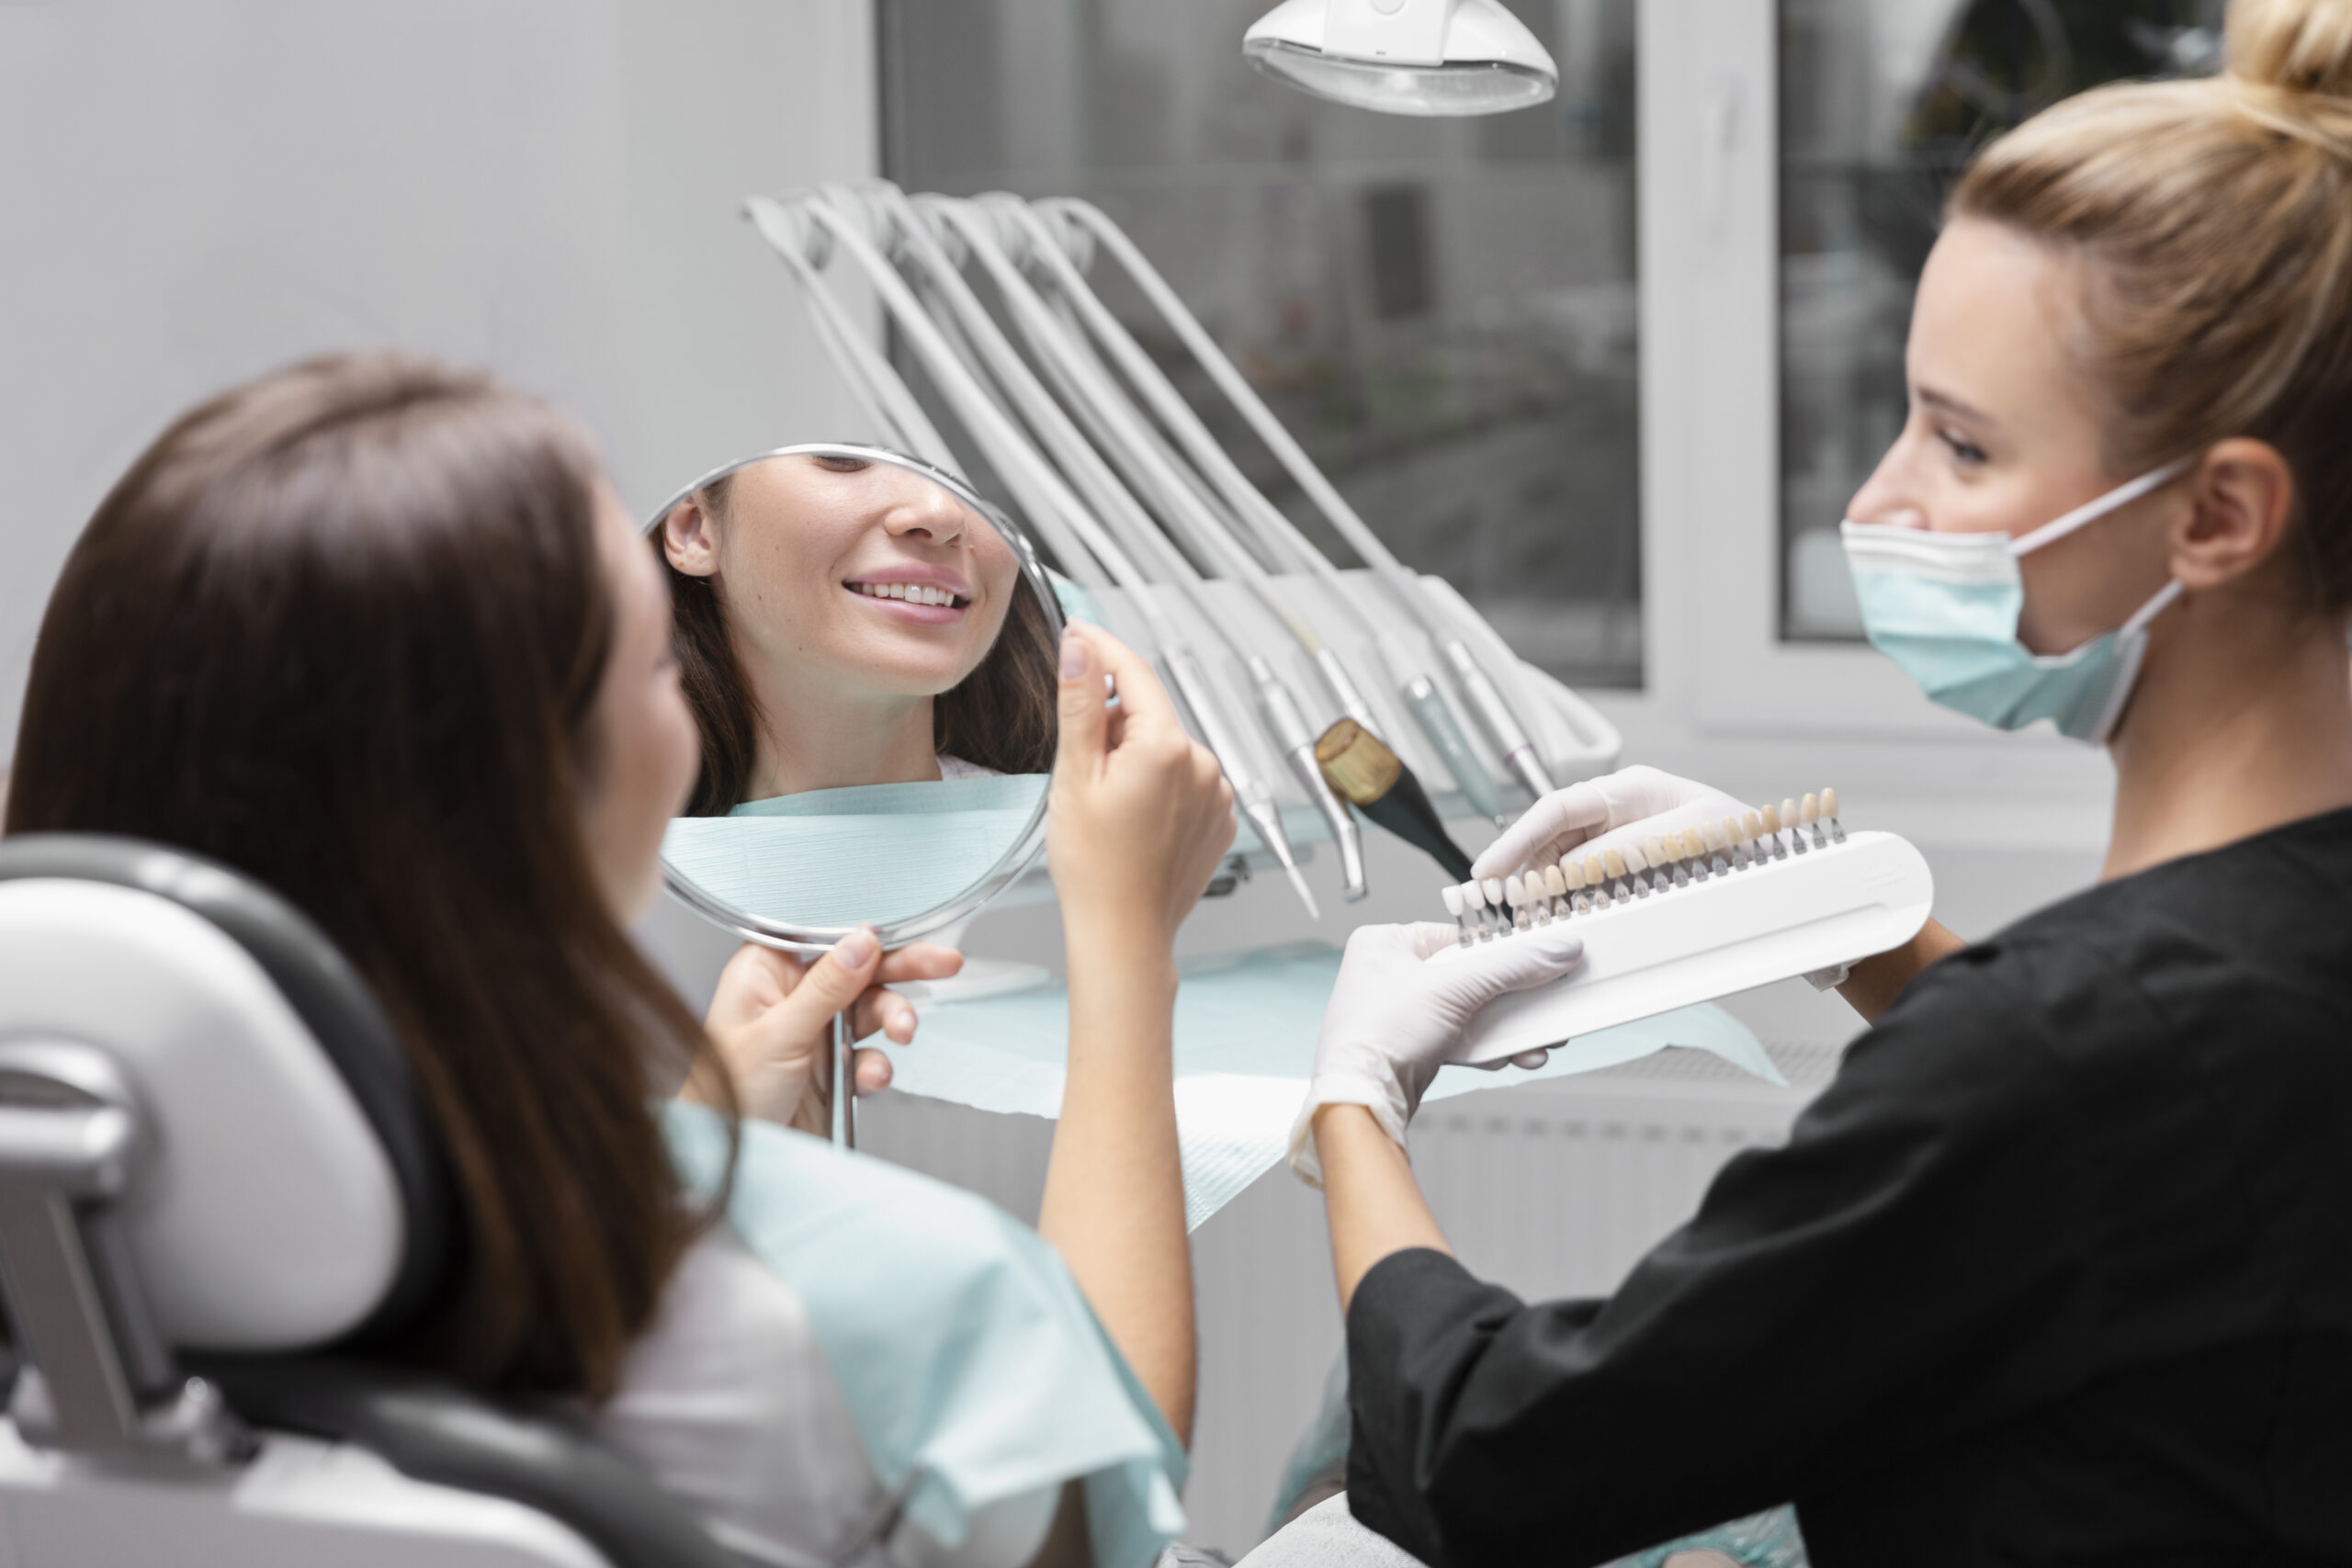 Dental Care Tips